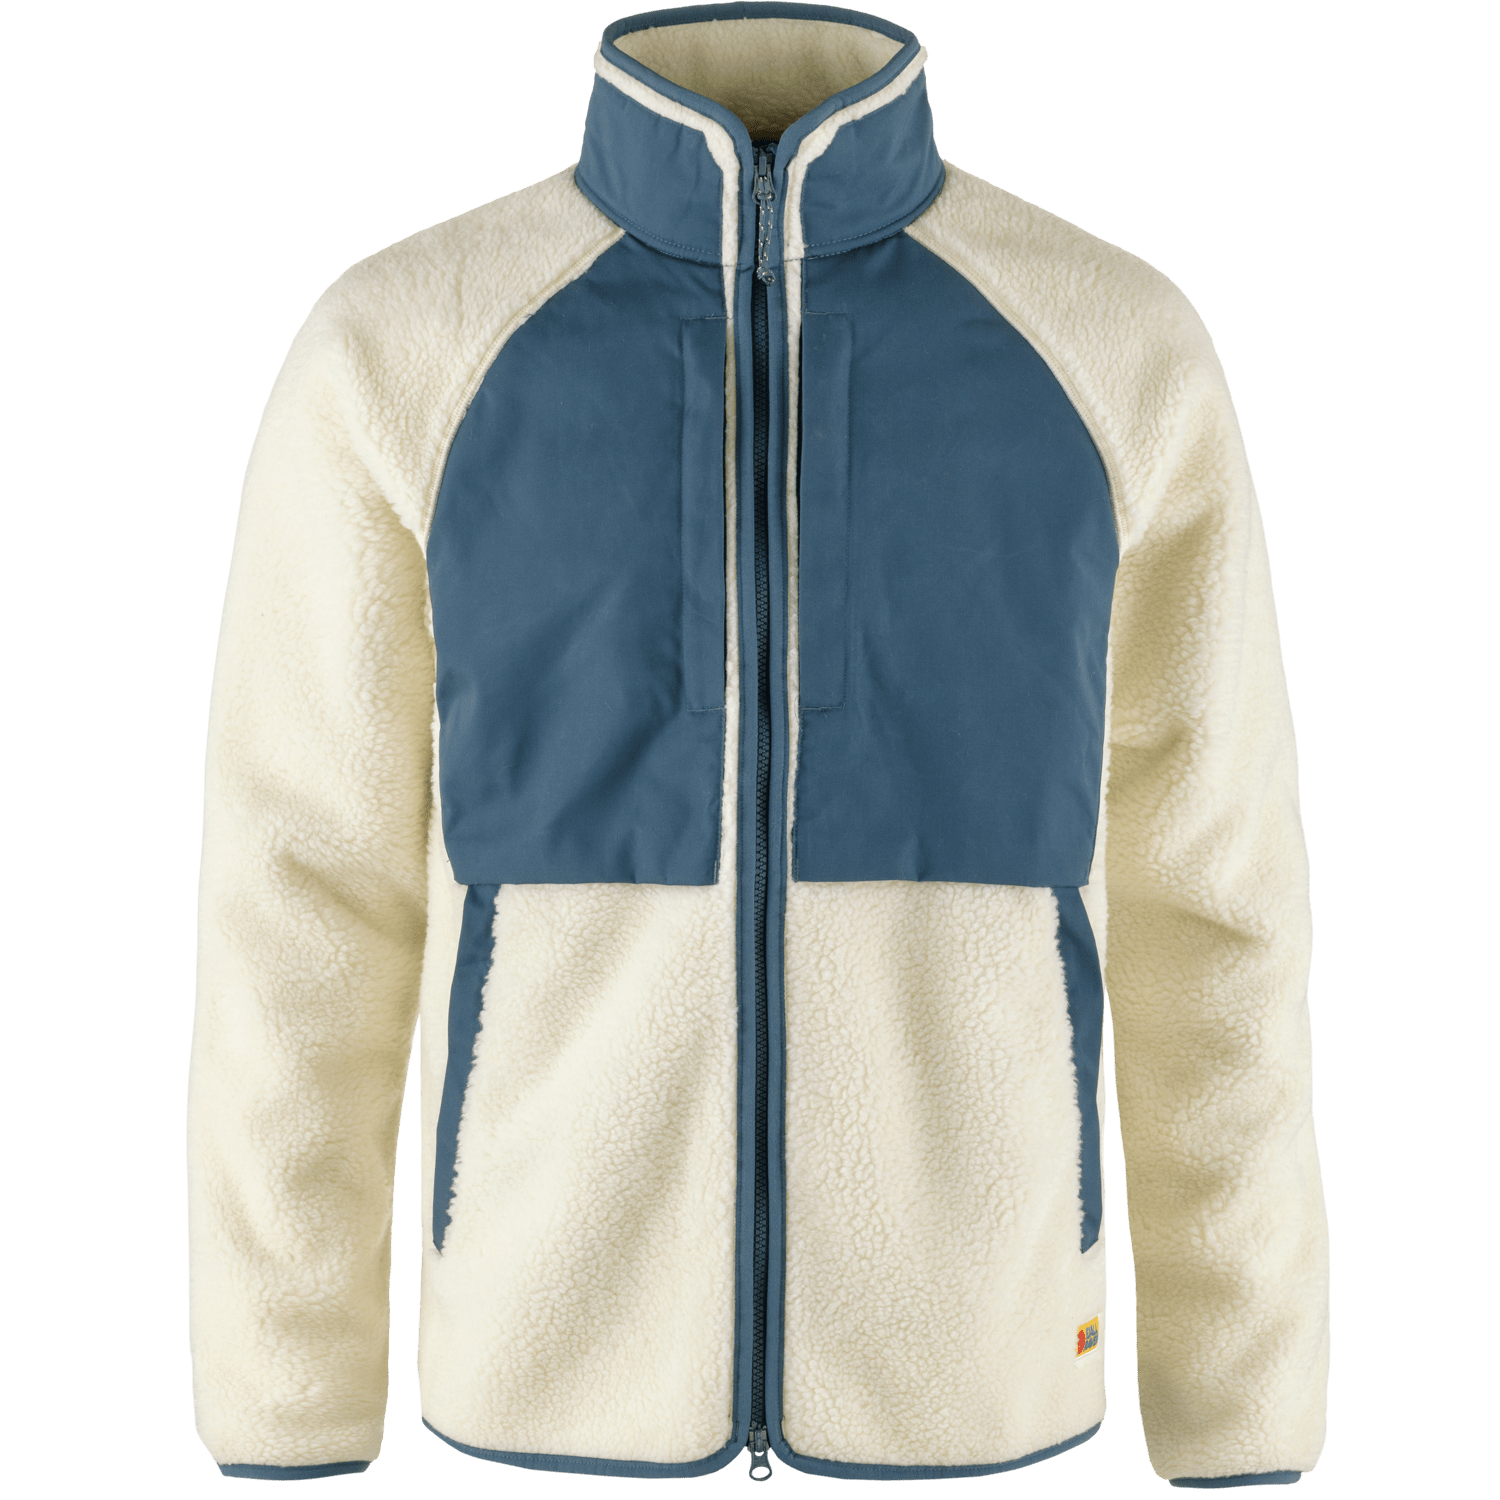 Fjällräven M's Vardag Pile Jacket - Recycled Polyester Chalk White-Indigo Blue